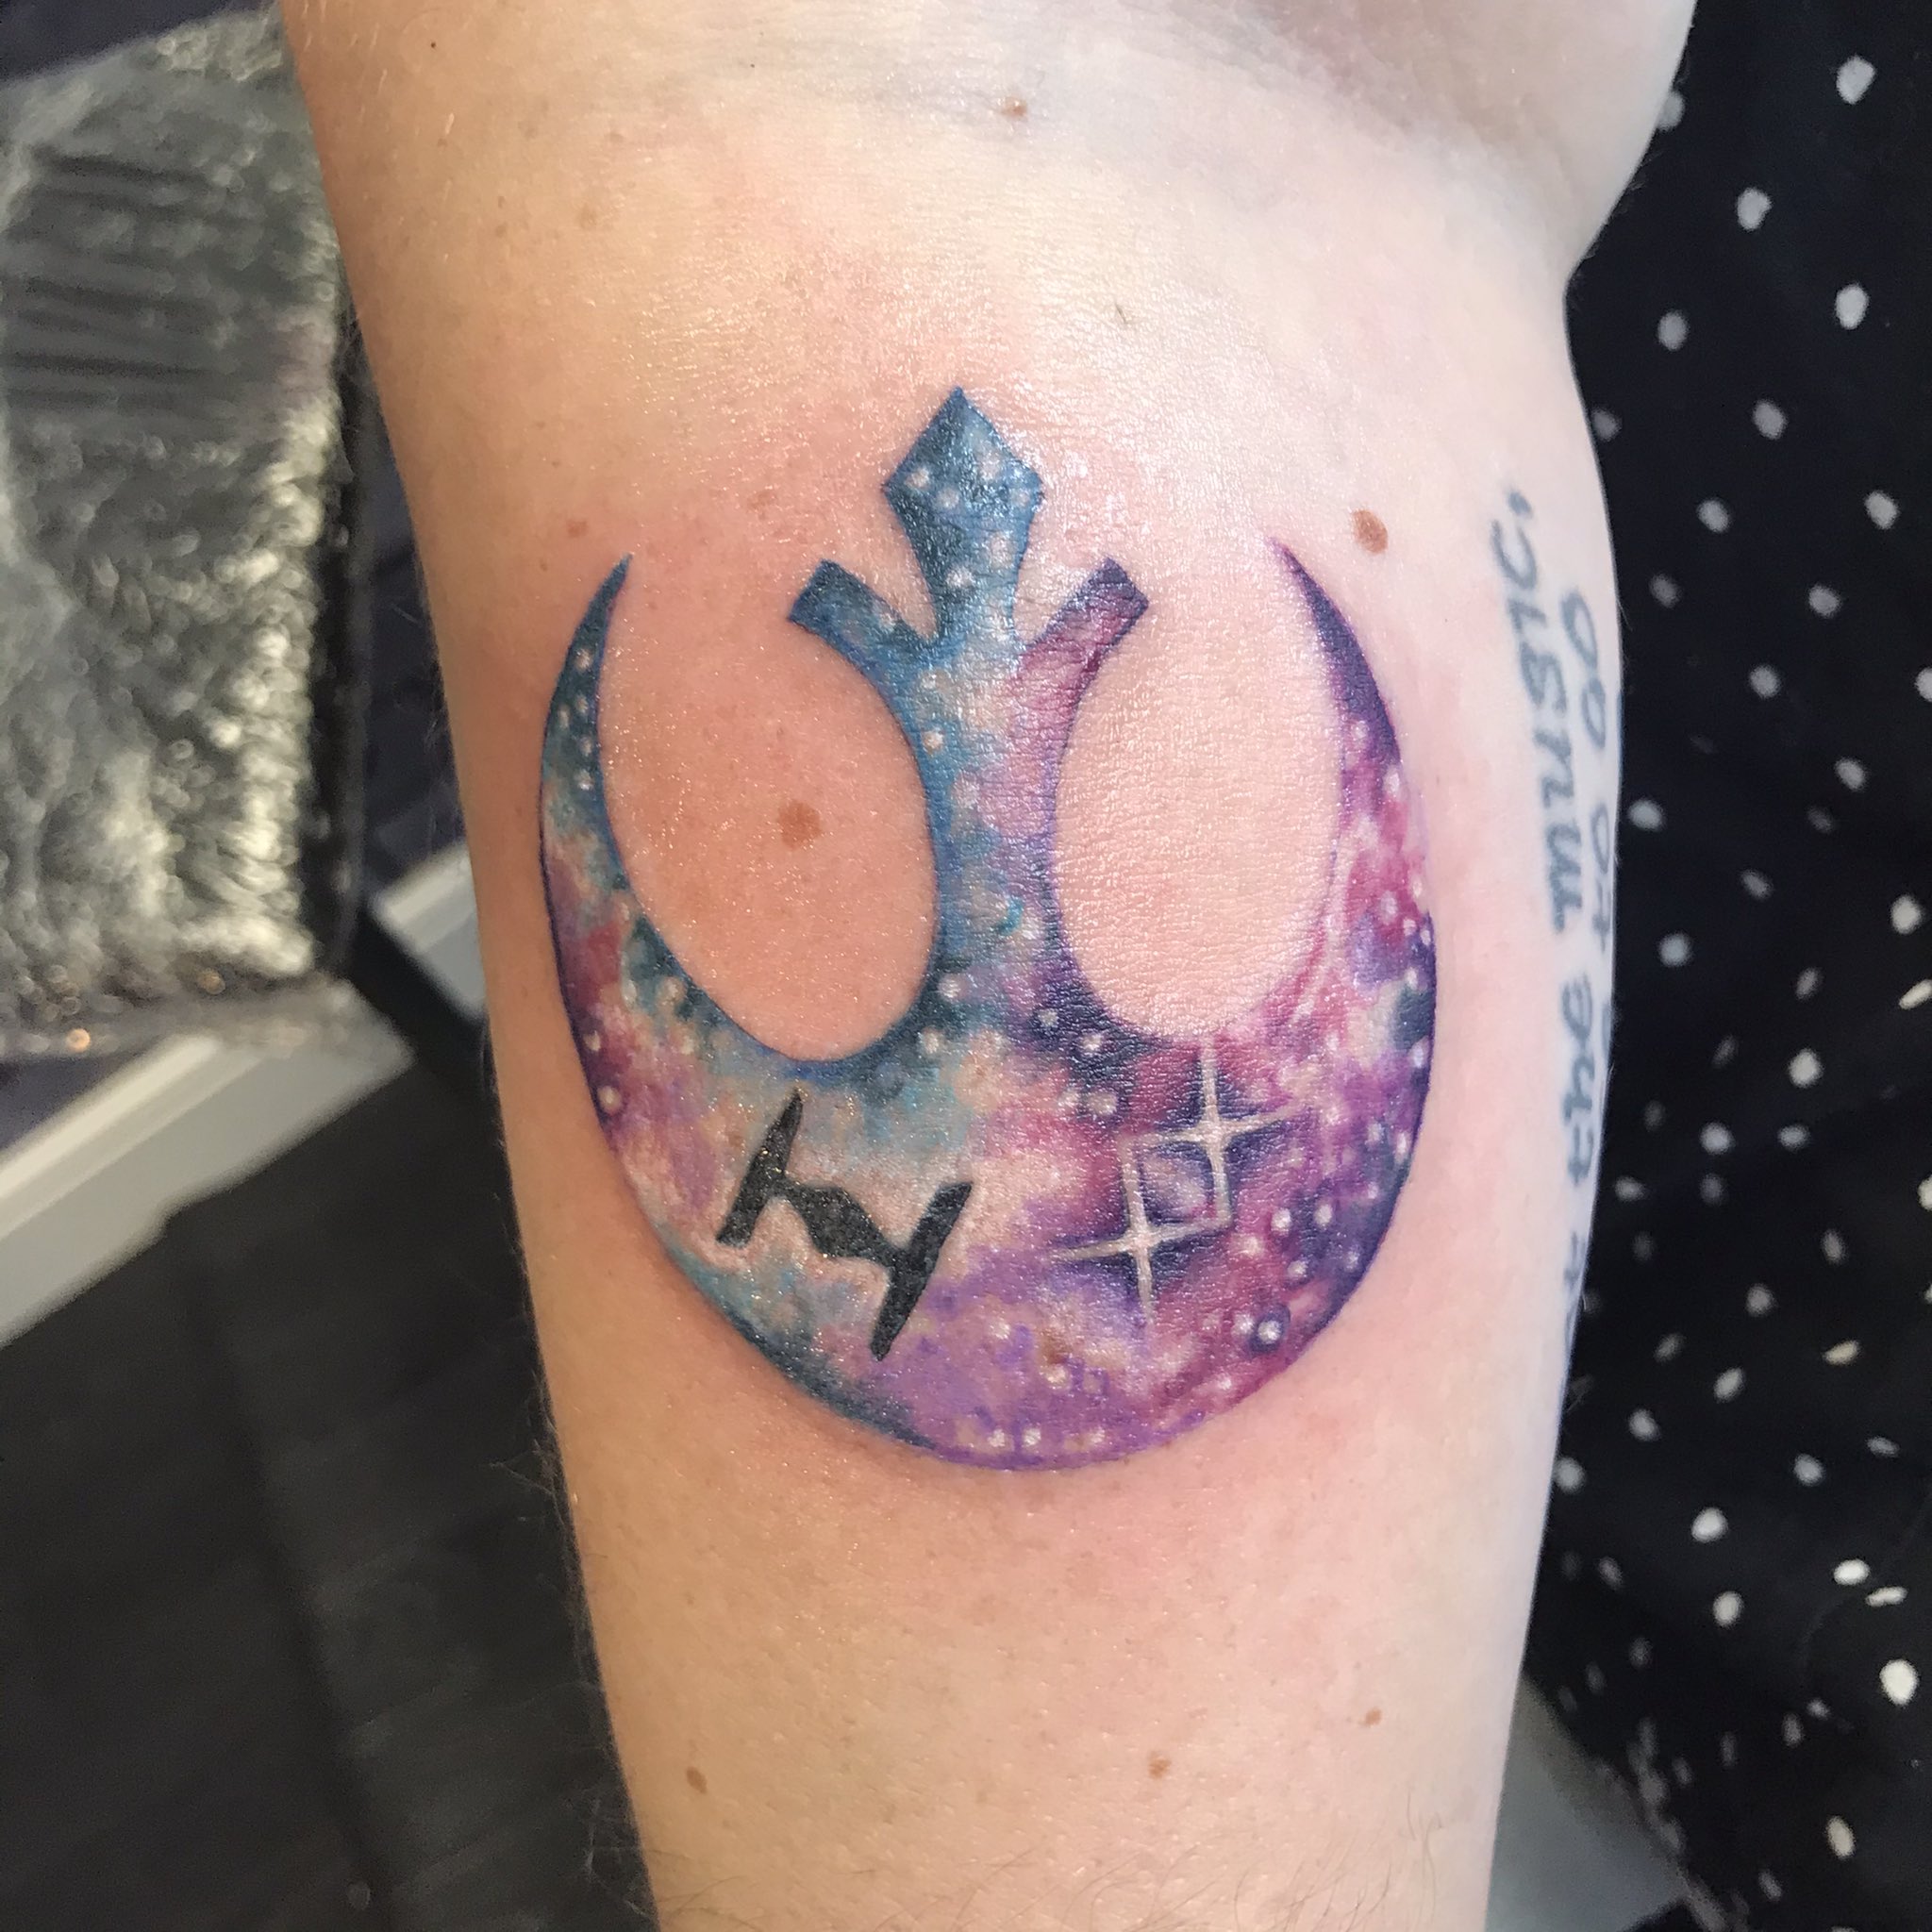 Rebel Alliance Blue Squadron Tattoo by MikeAttackTattoo on DeviantArt